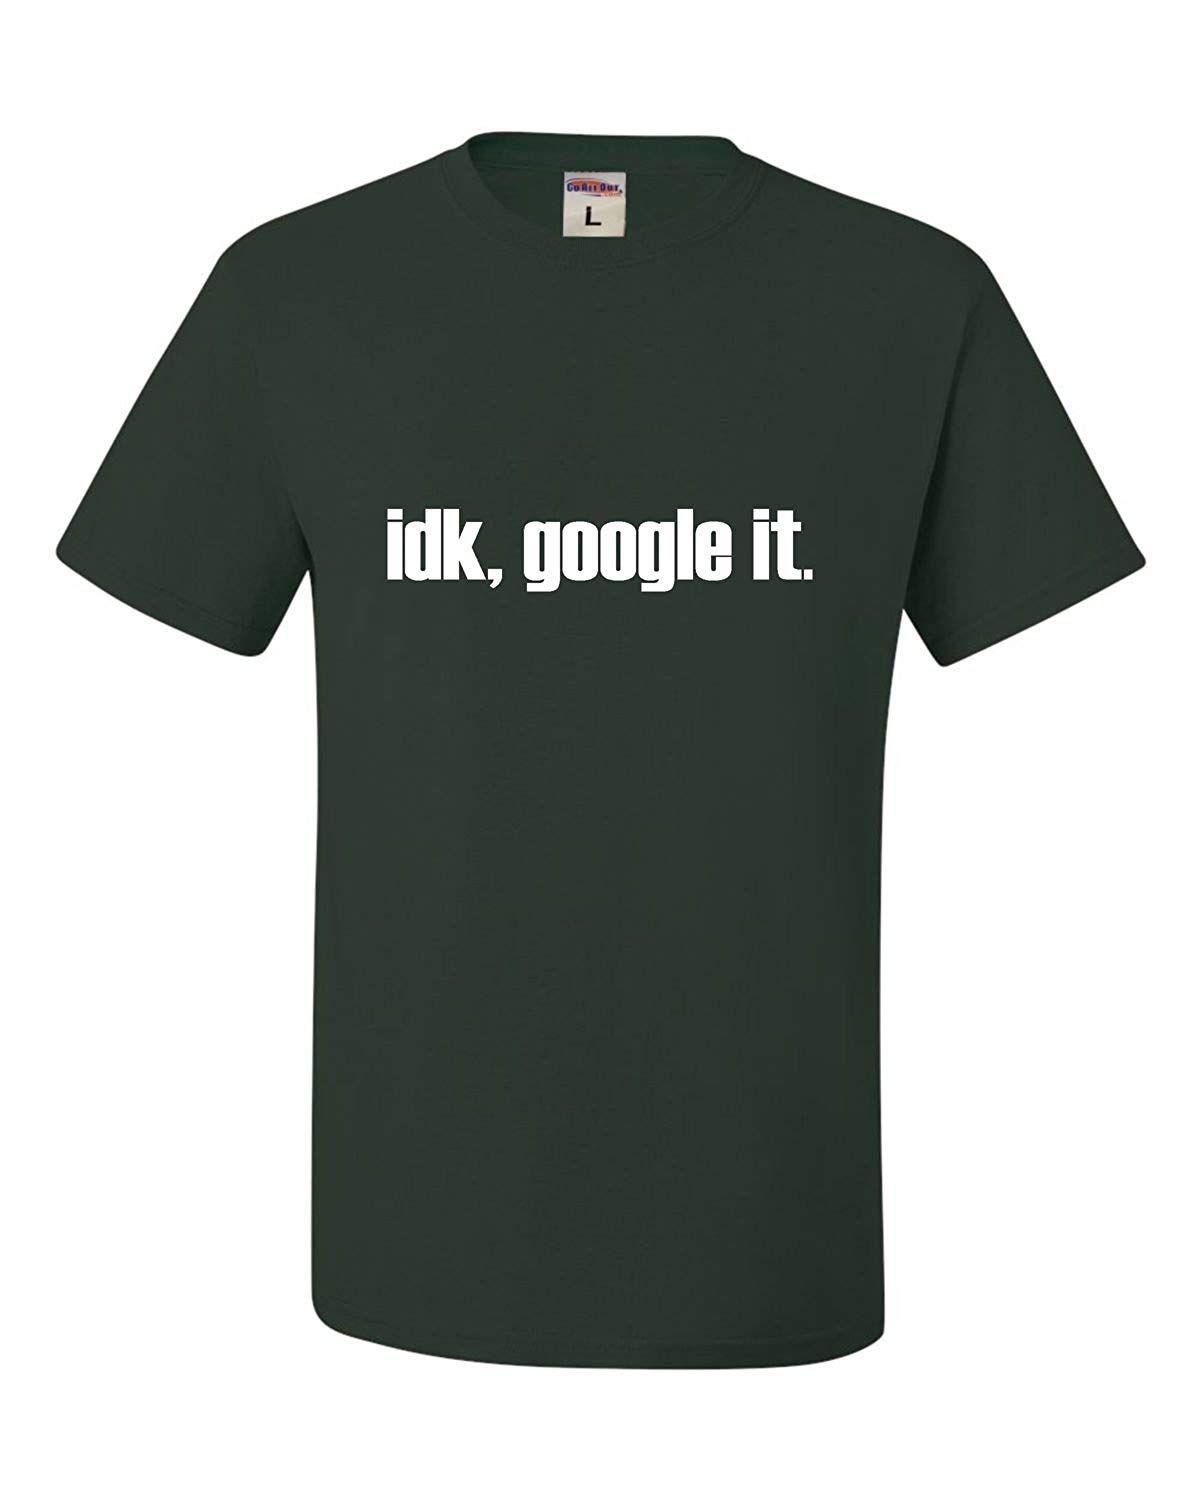 Adult Funny Google Logo - Amazon.com: Adult I Don't Know Google It IDK Funny T-Shirt: Clothing